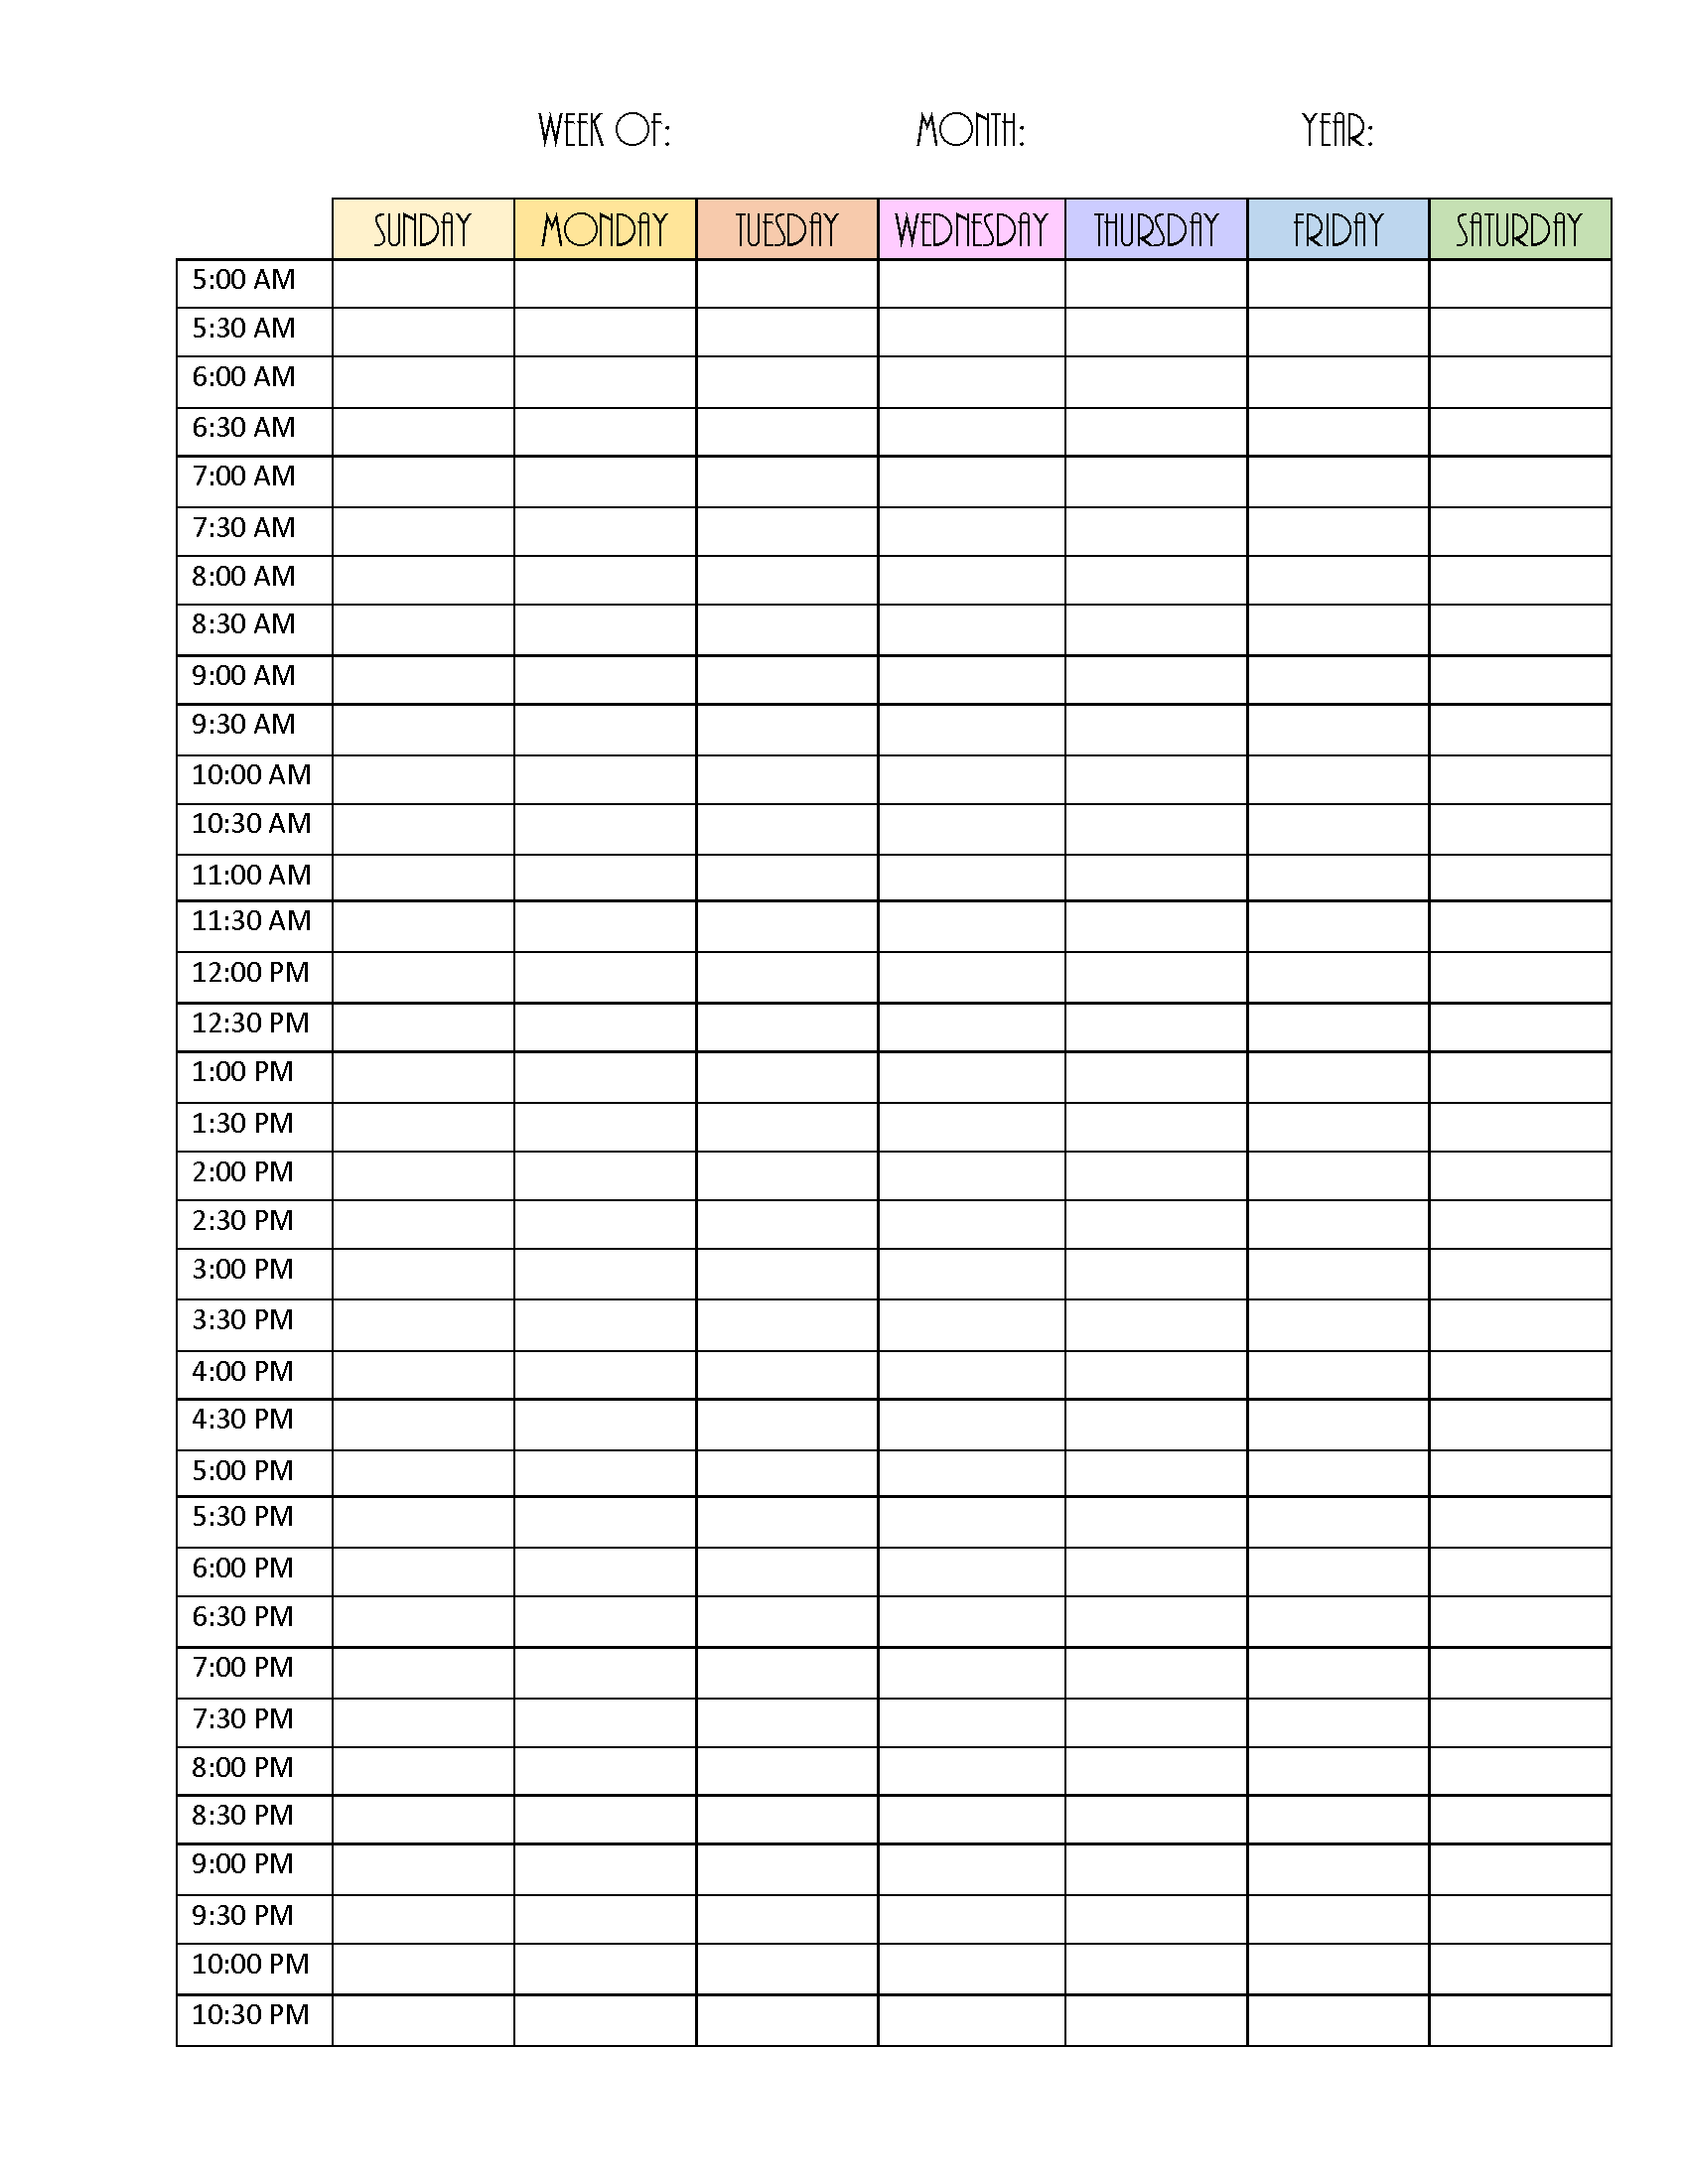 Universal Monday To Friday Blank Kids Schedule Get Your Calendar Blank Weekly Calendar